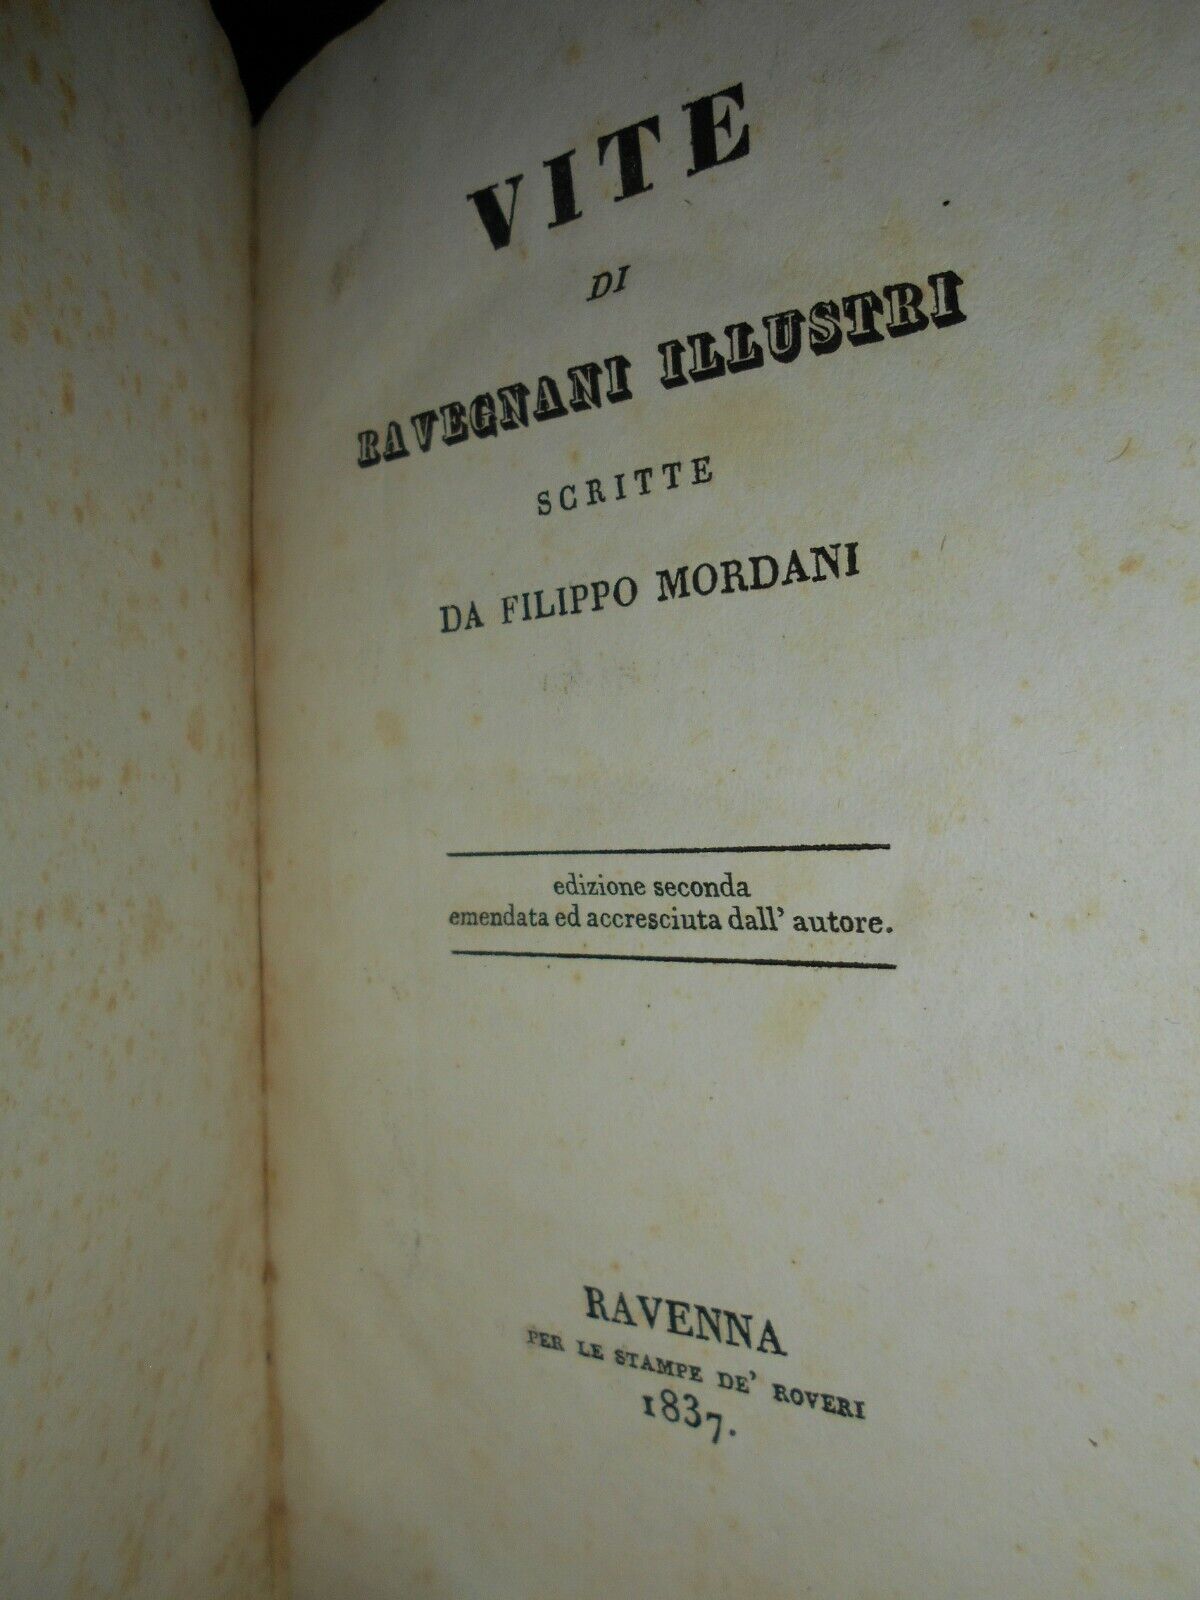 Immagine 2 - (Ravenna) Vite di Ravegnani Illustri scritte da Filippo Mordani  1837